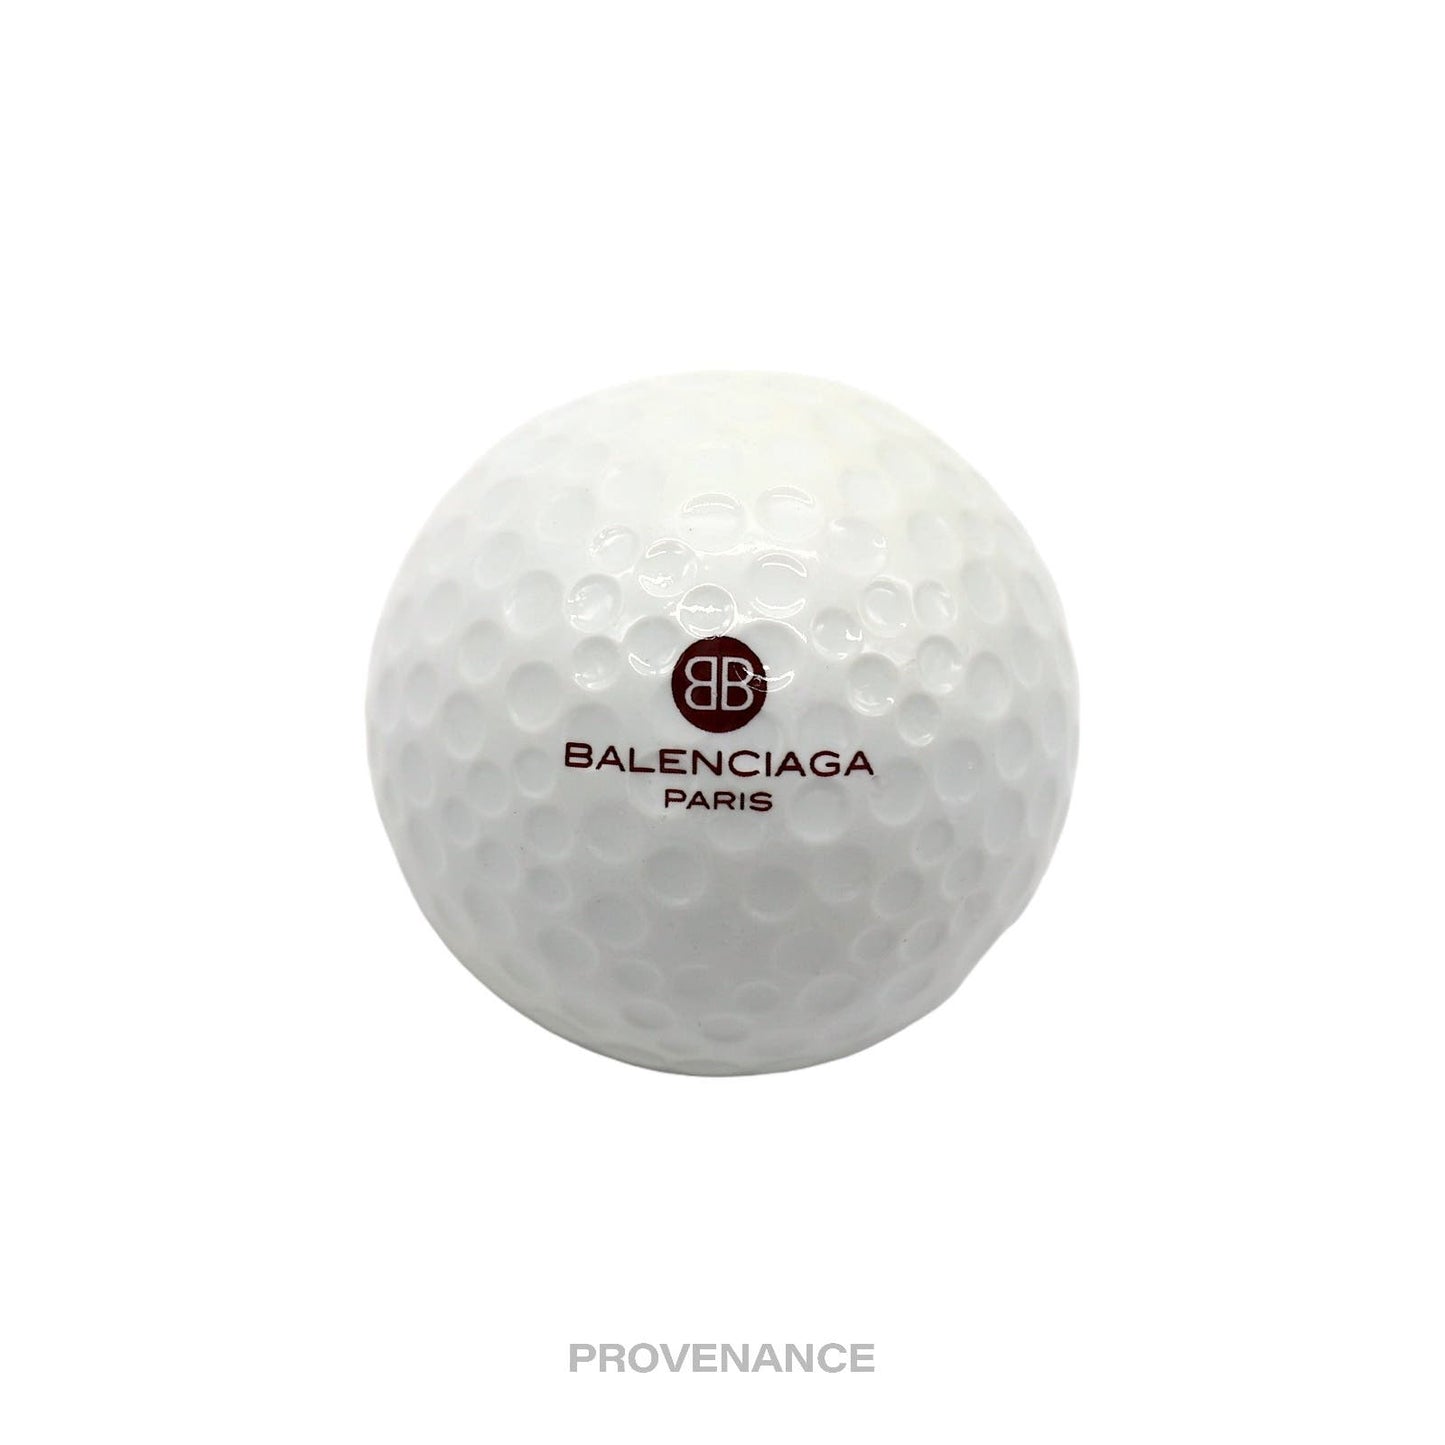 🔴 Balenciaga x Dunlop Golf Balls (Set of 3) - Brown